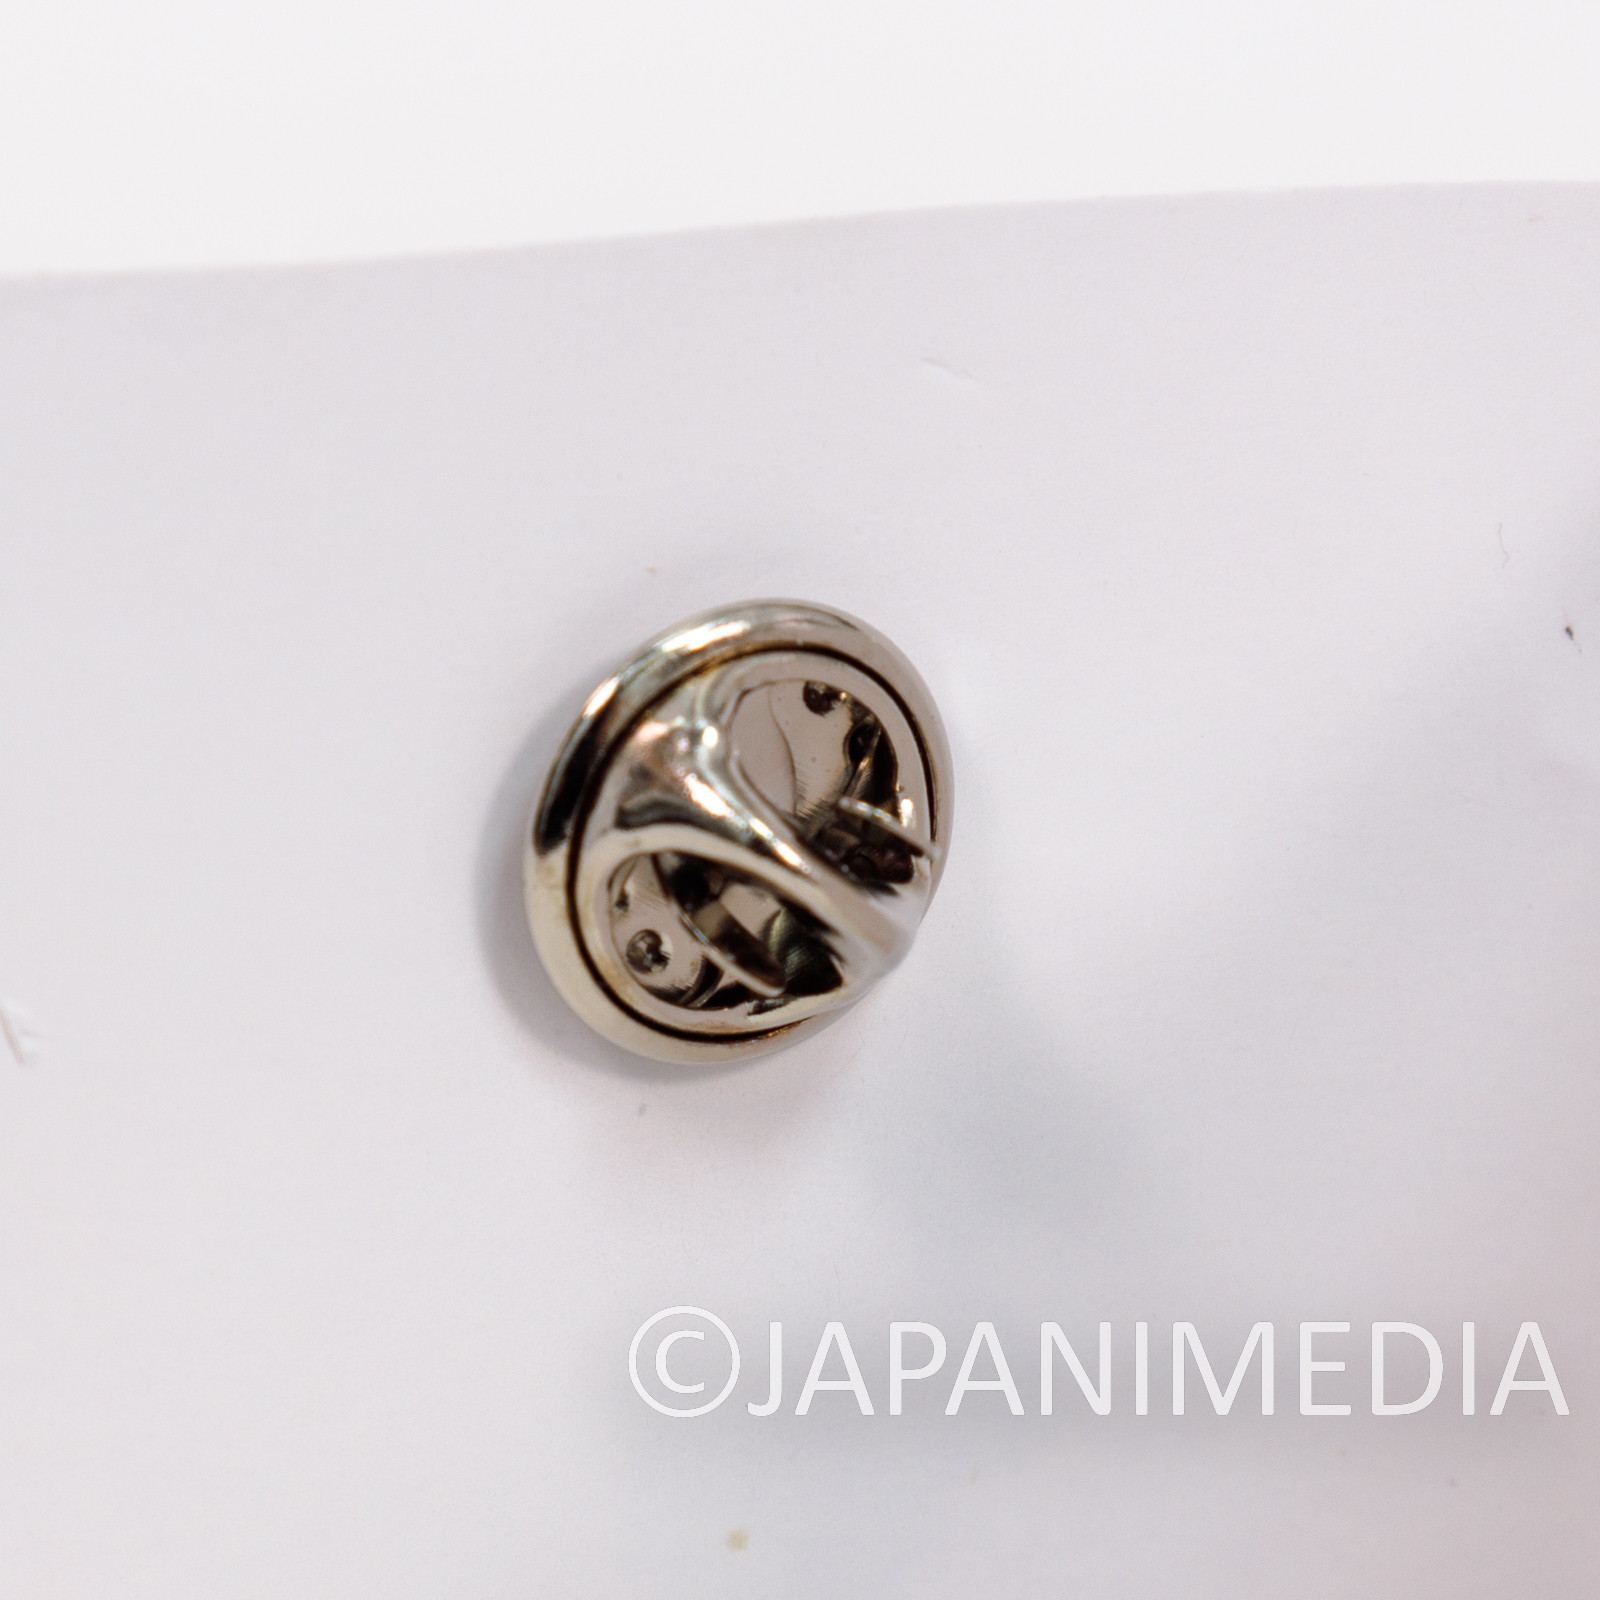 Fate/hollow Ataraxia Illyasviel von Einzbern Metal Pins JAPAN ANIME MANGA 1